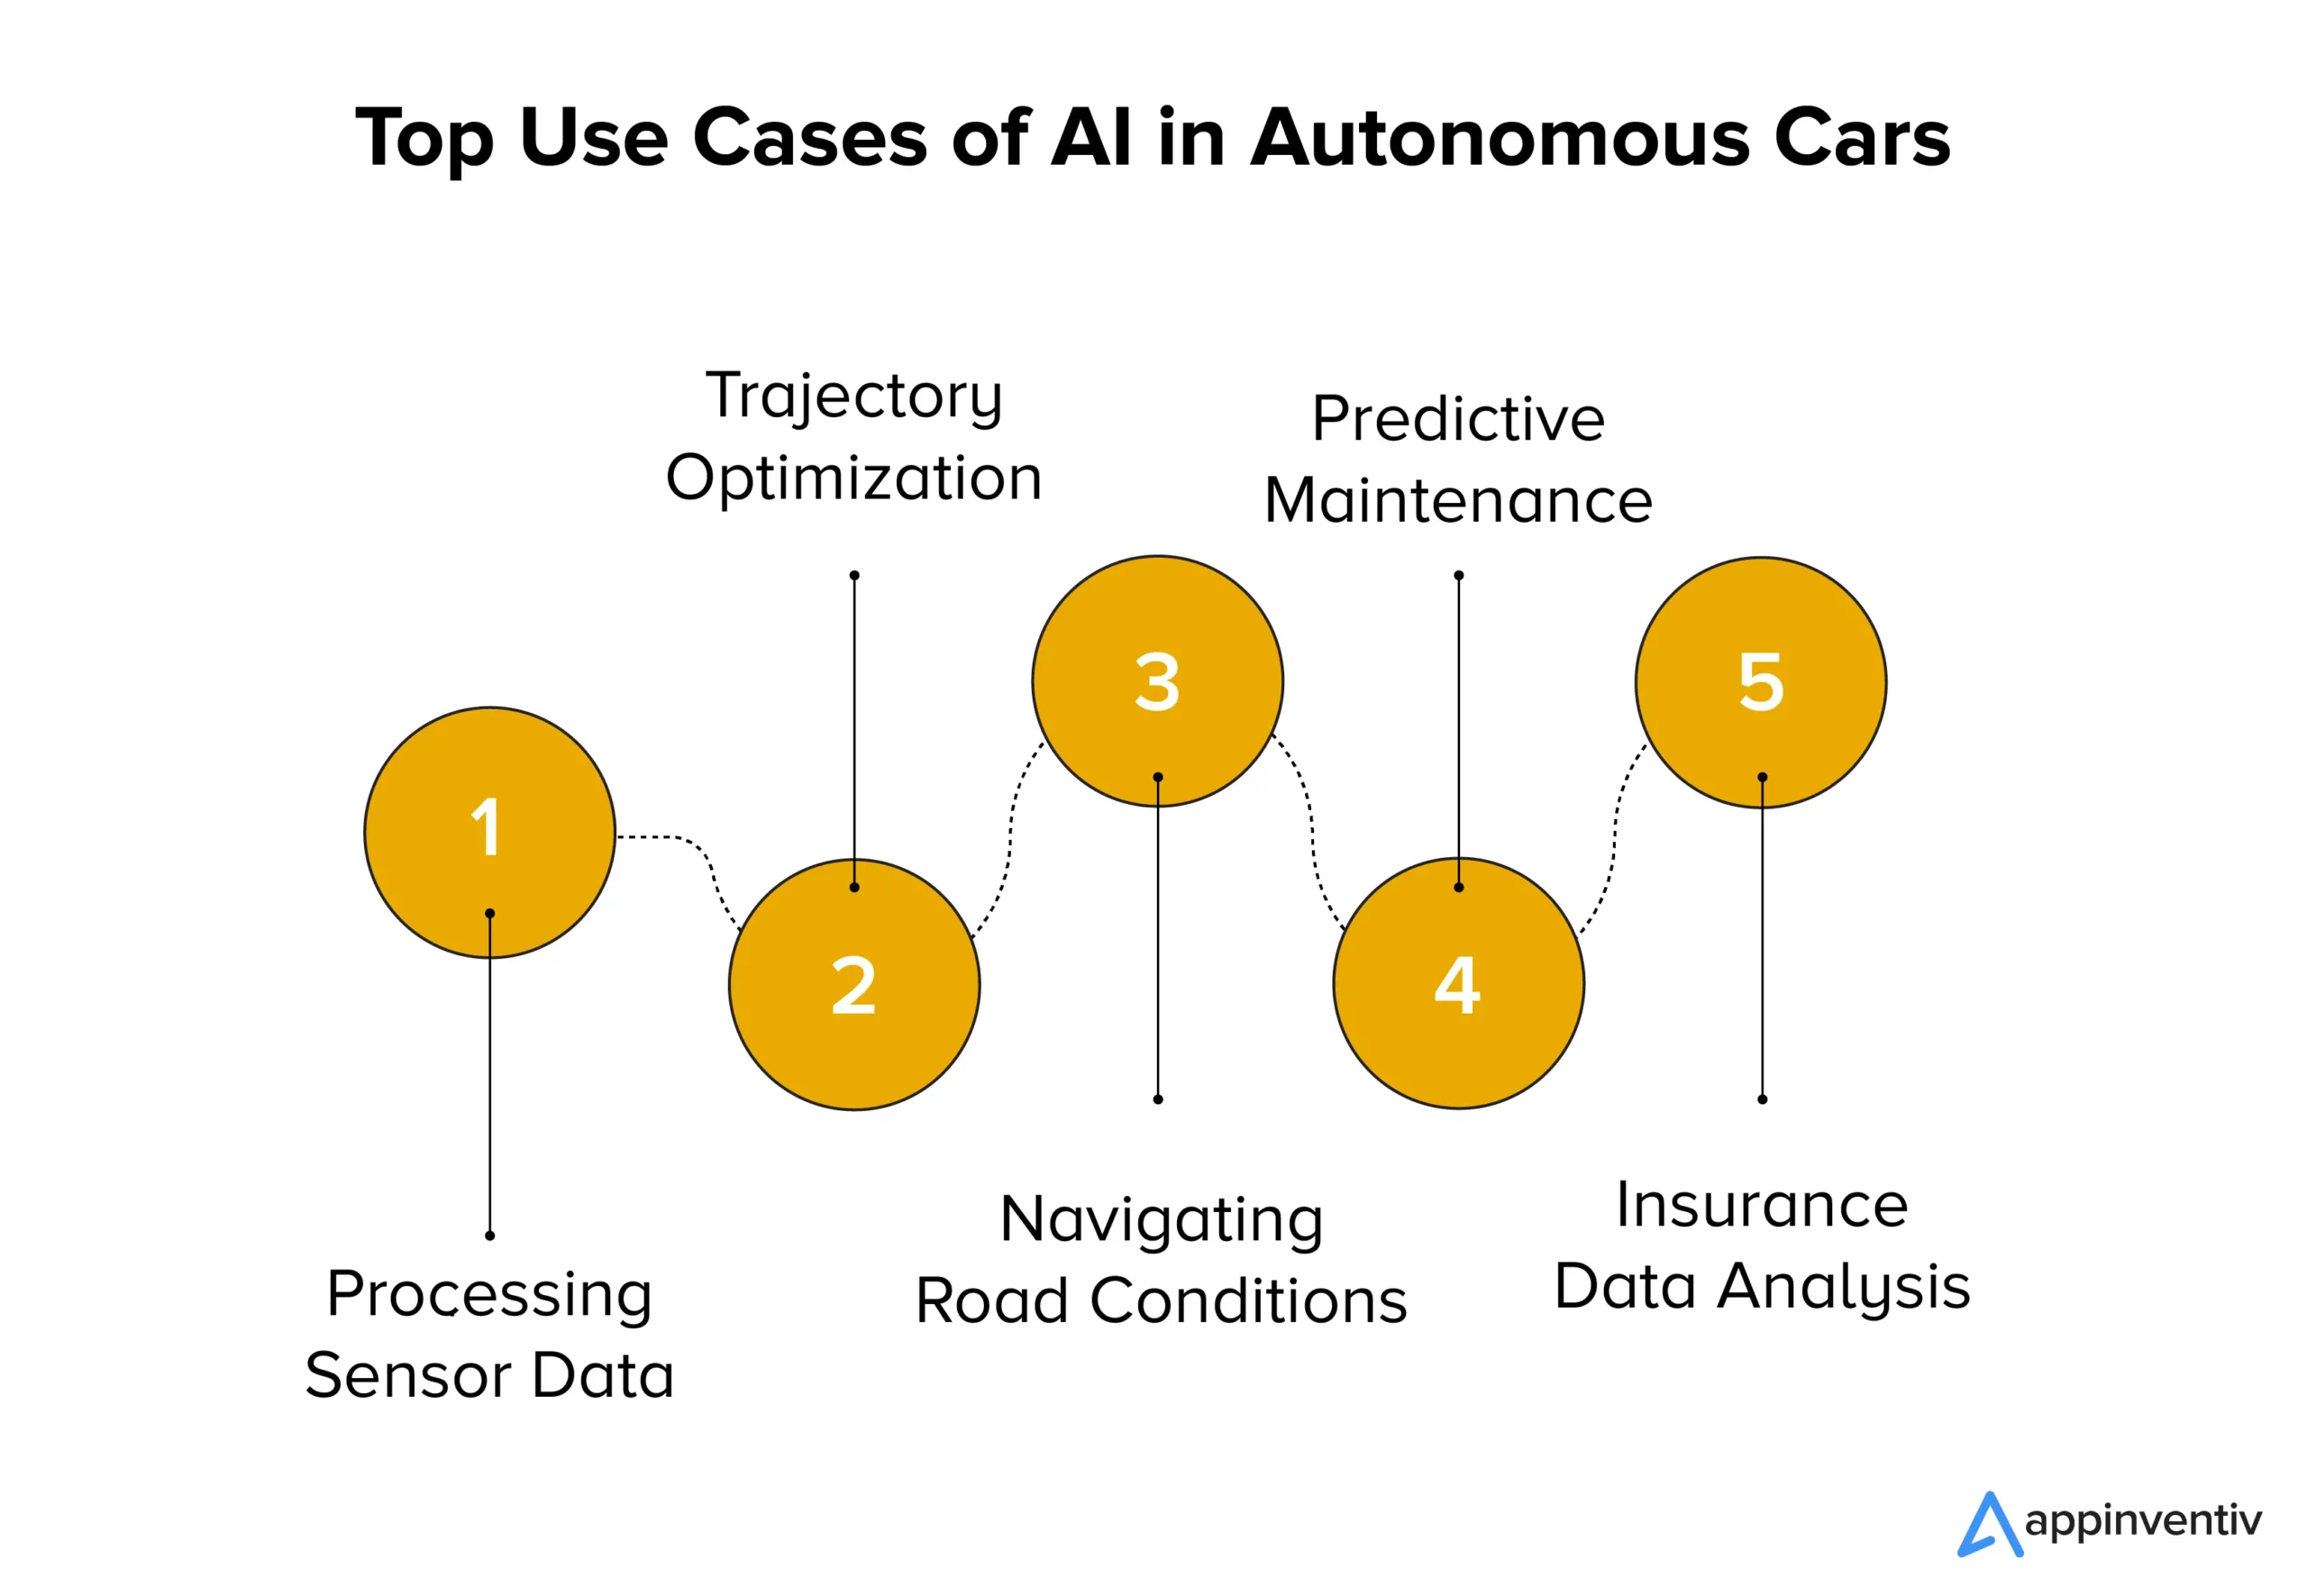 Top use cases of AI in autonomous cars